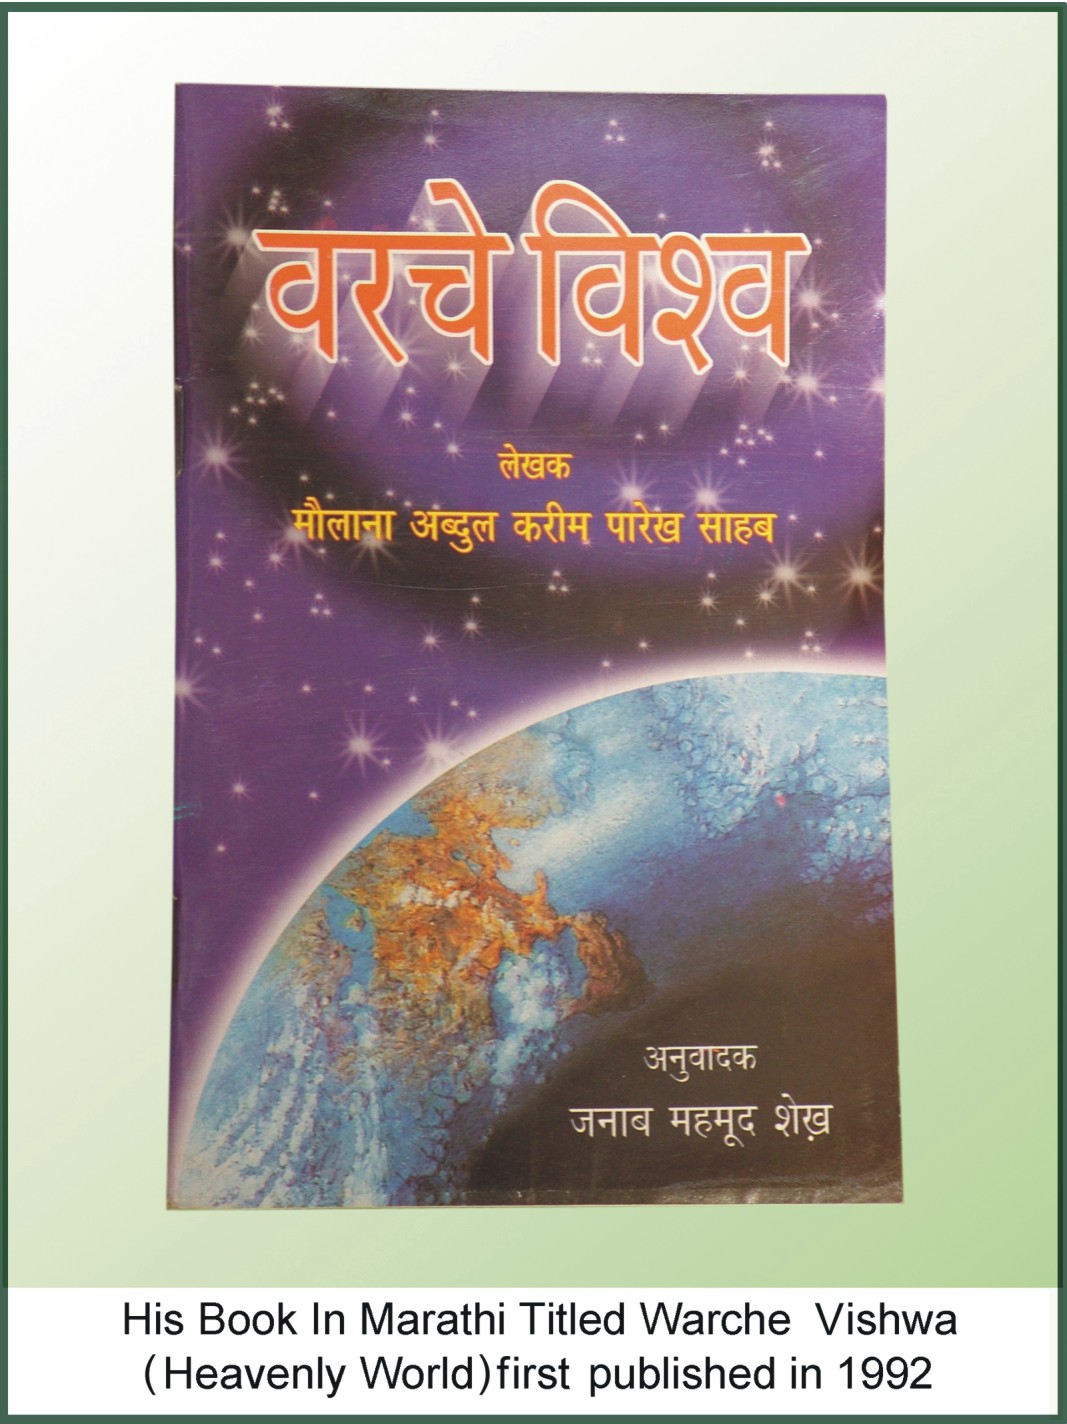 Warche Vishwa (Heavenly World) (Marathi) First Published in 1992